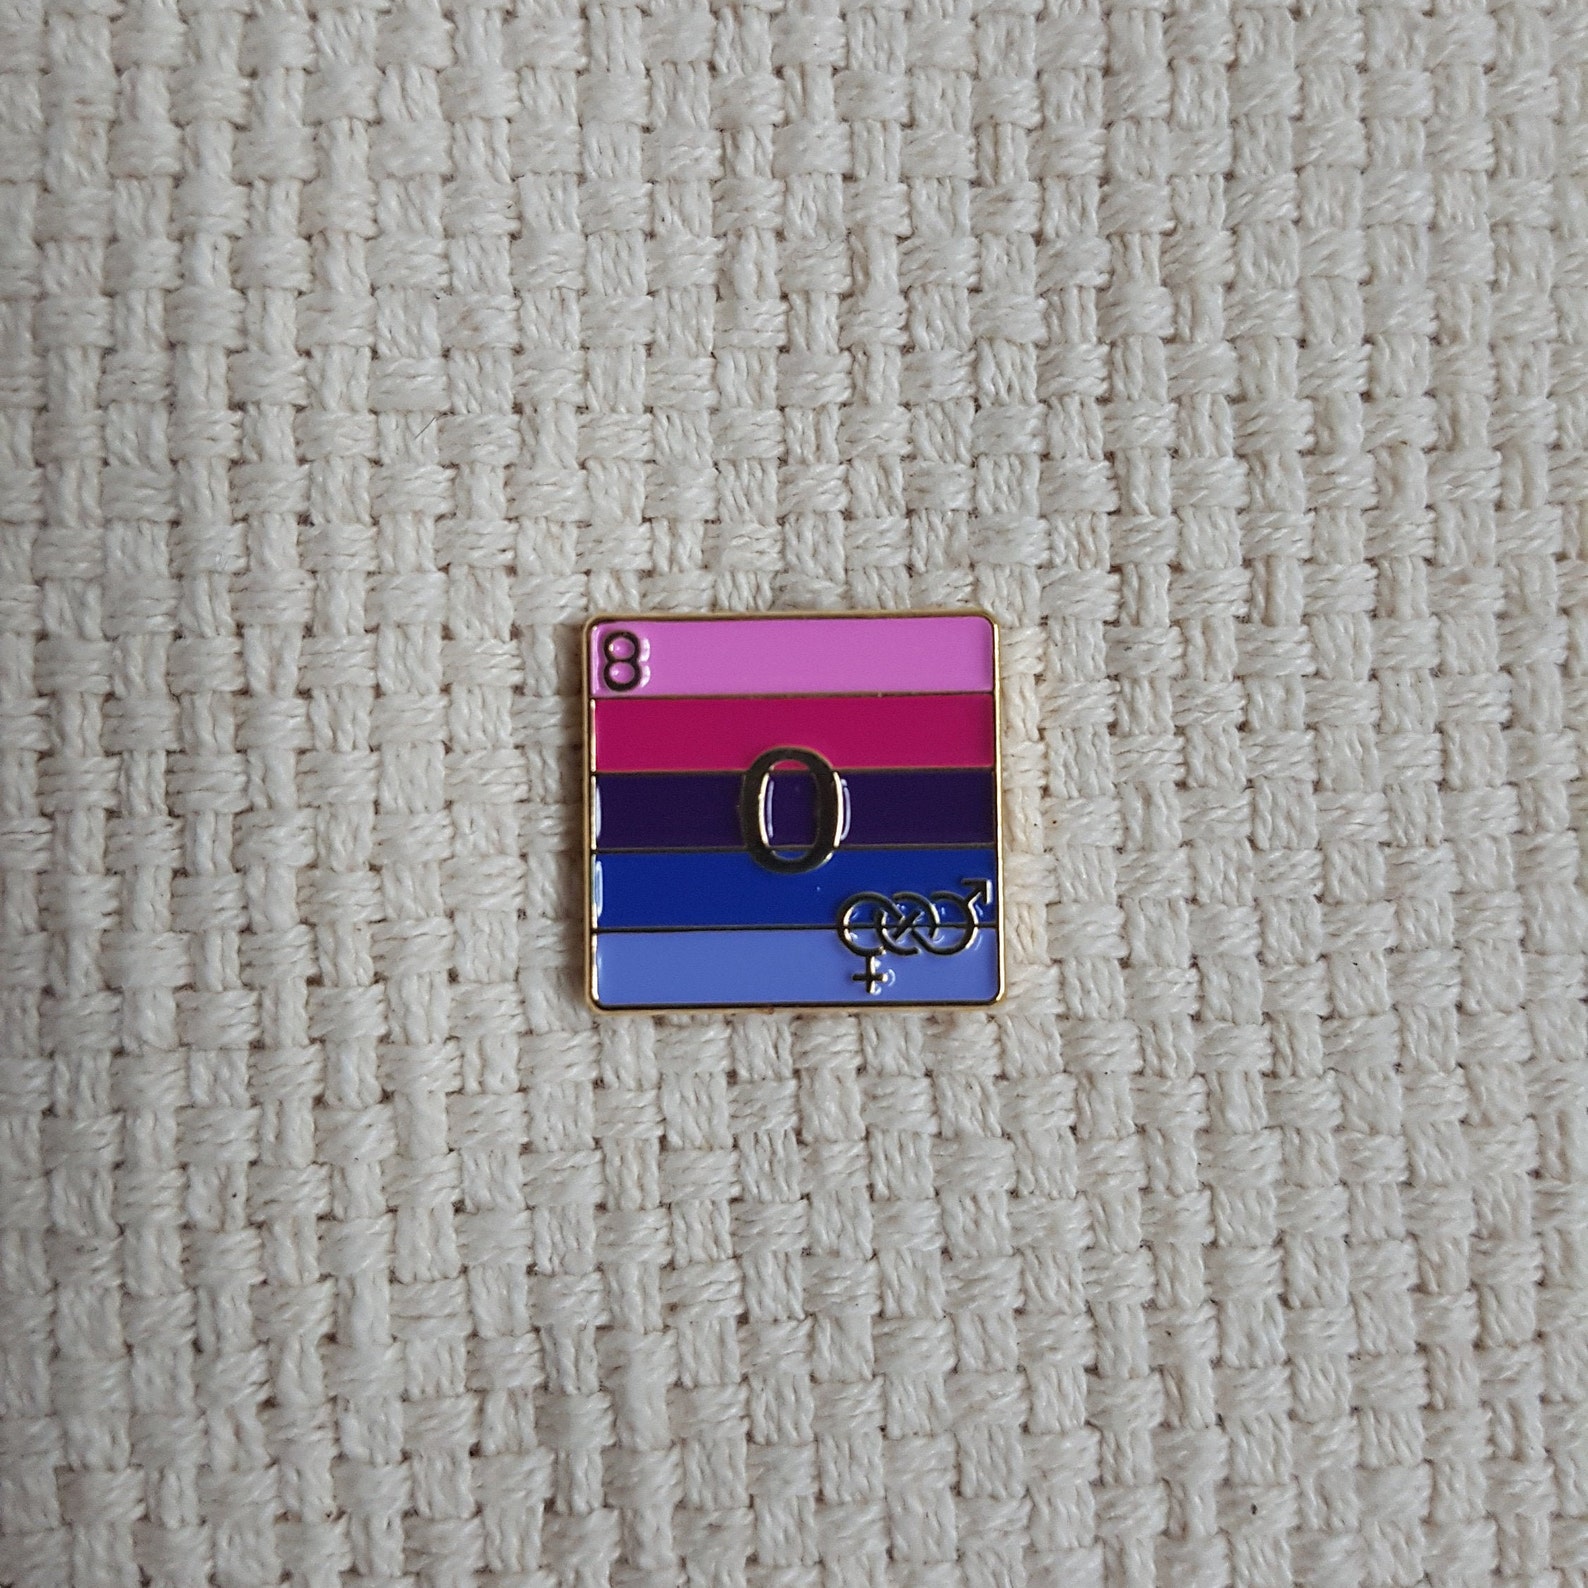 Omnisexual Pride Badge Pansexuality Soft Enamel Queer Etsy